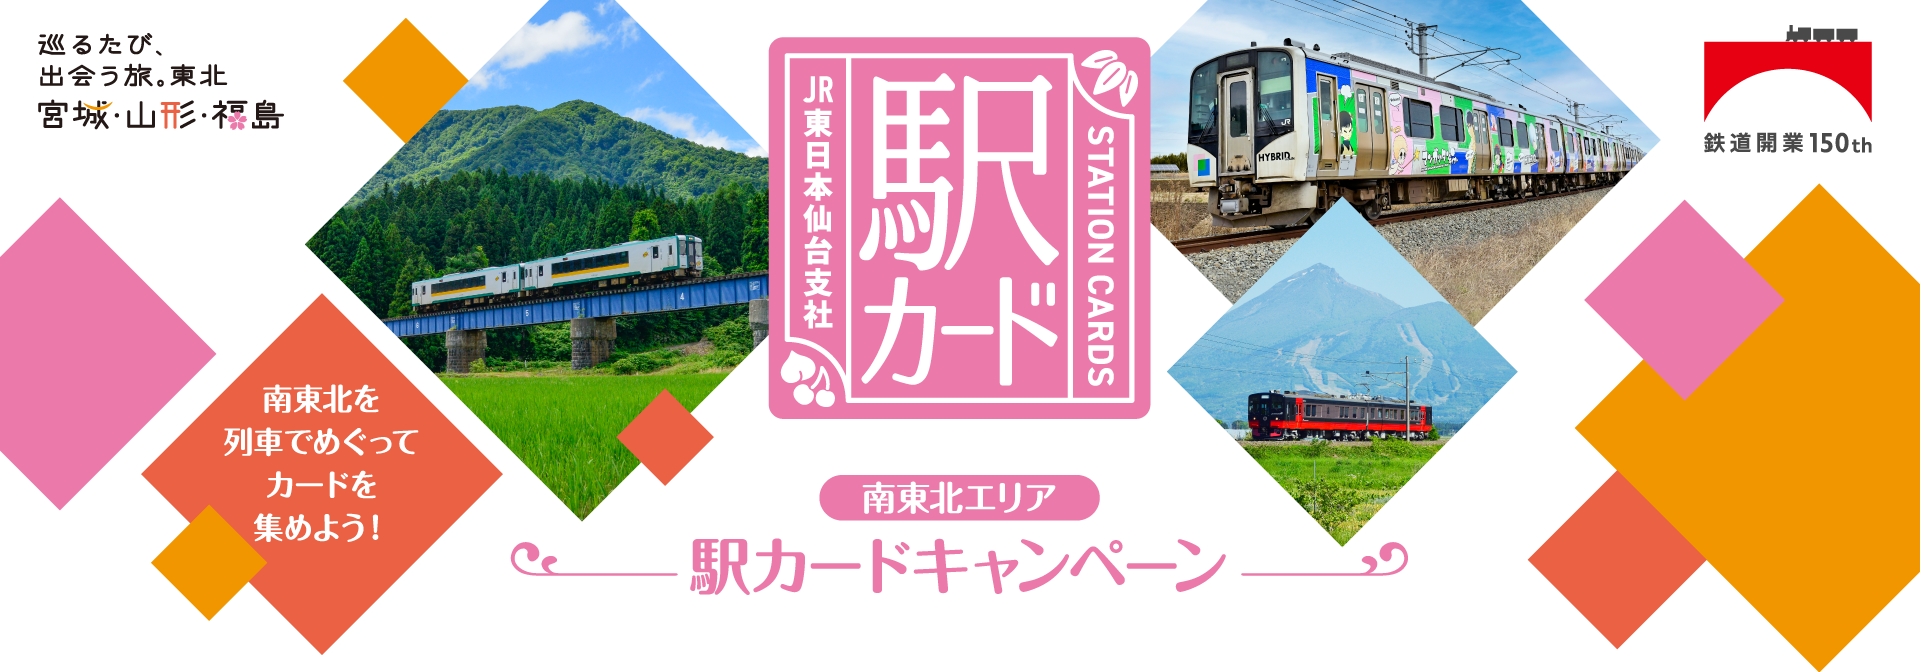 JR東日本仙台支社 駅カードキャンペーン